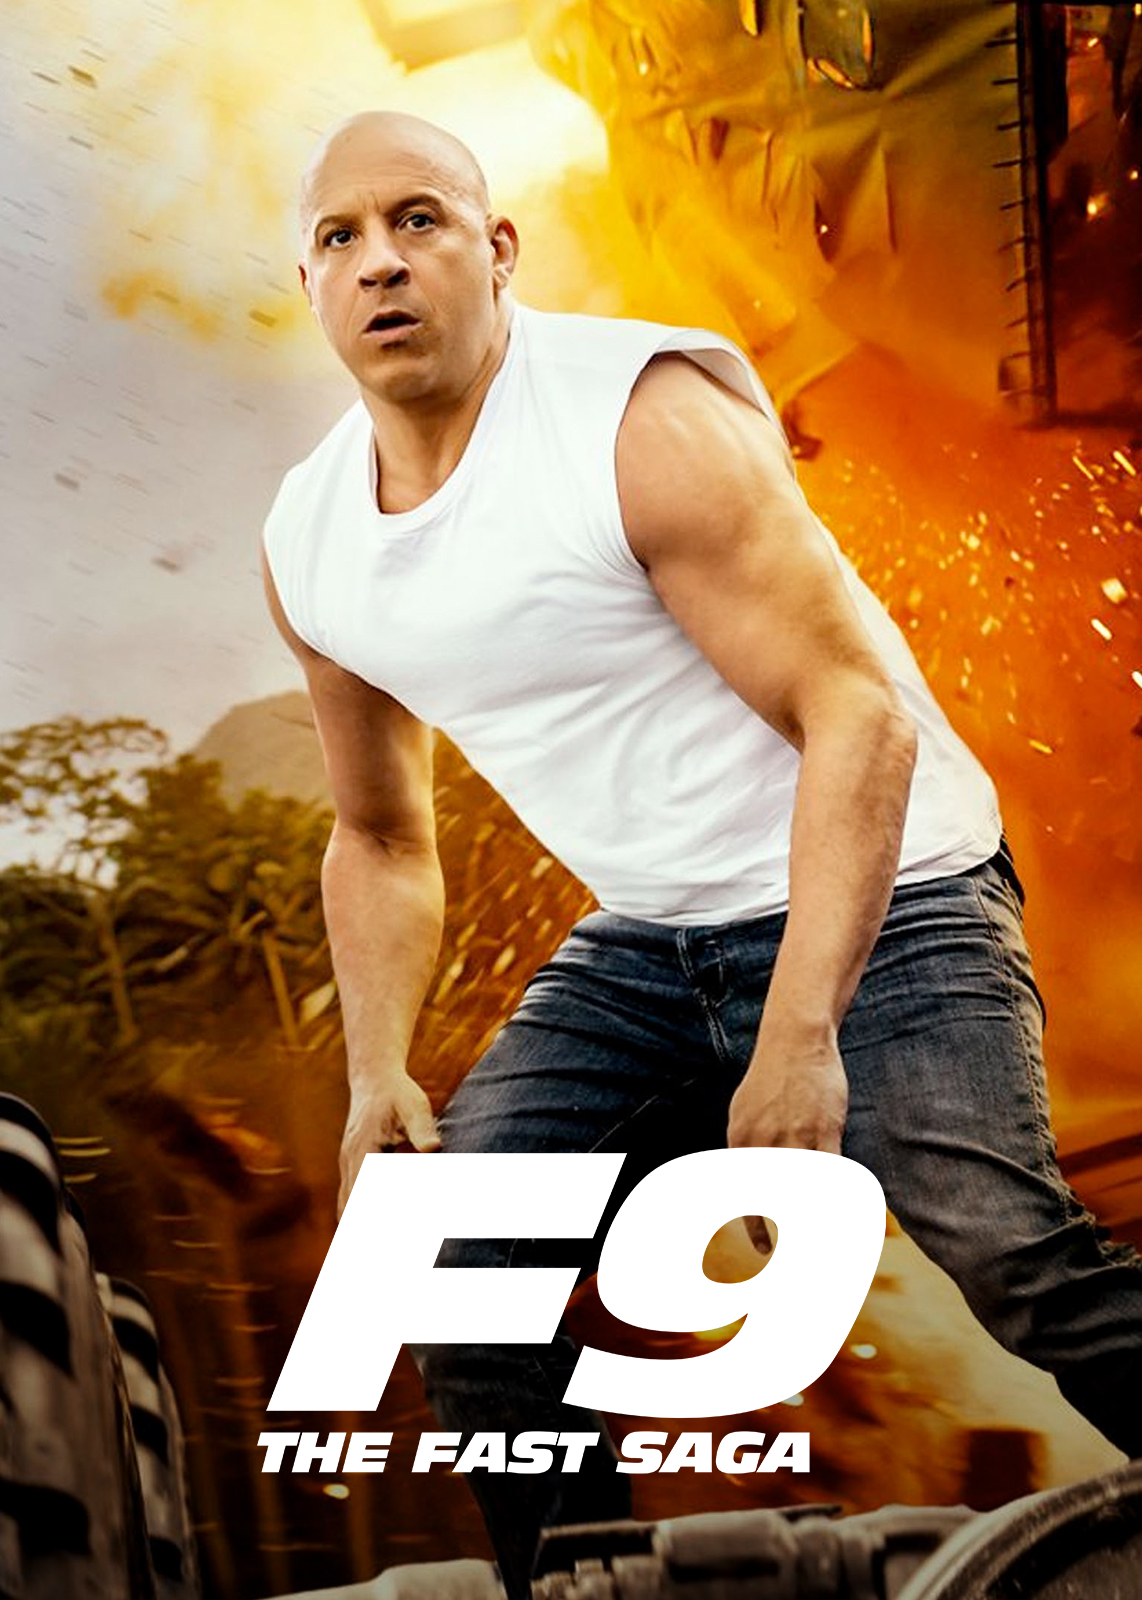 F9 The Fast Saga, Full Movie